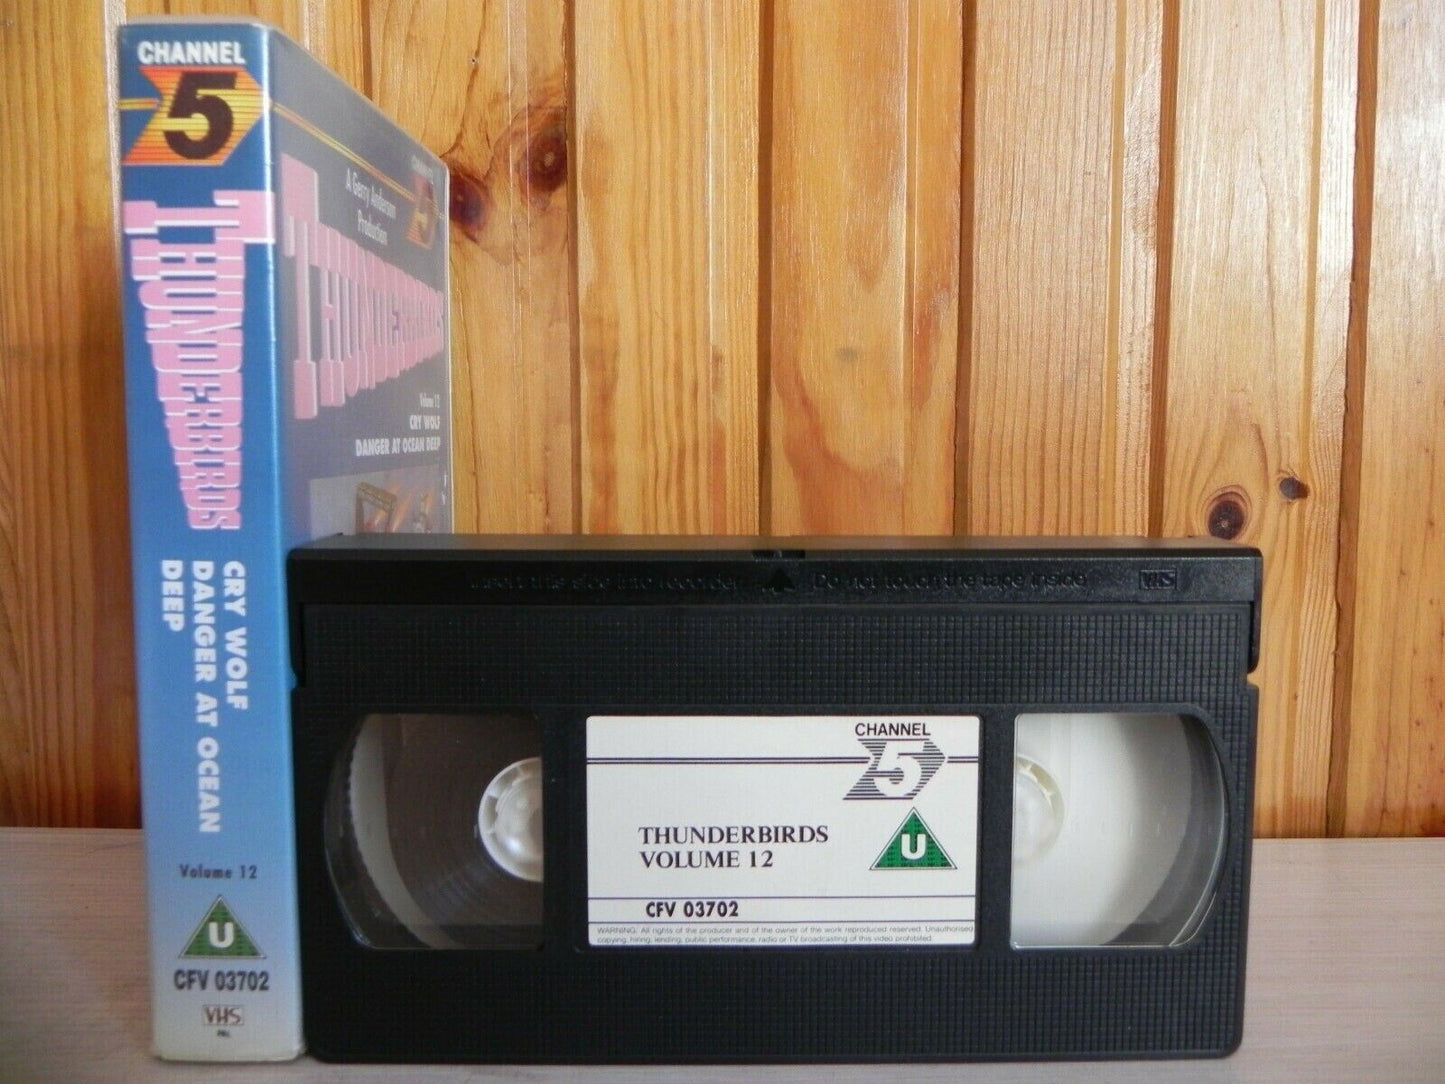 Thunderbirds - Volume 12 - Cry Wolf - Danger At The Ocean Deep - Kids - Pal VHS-